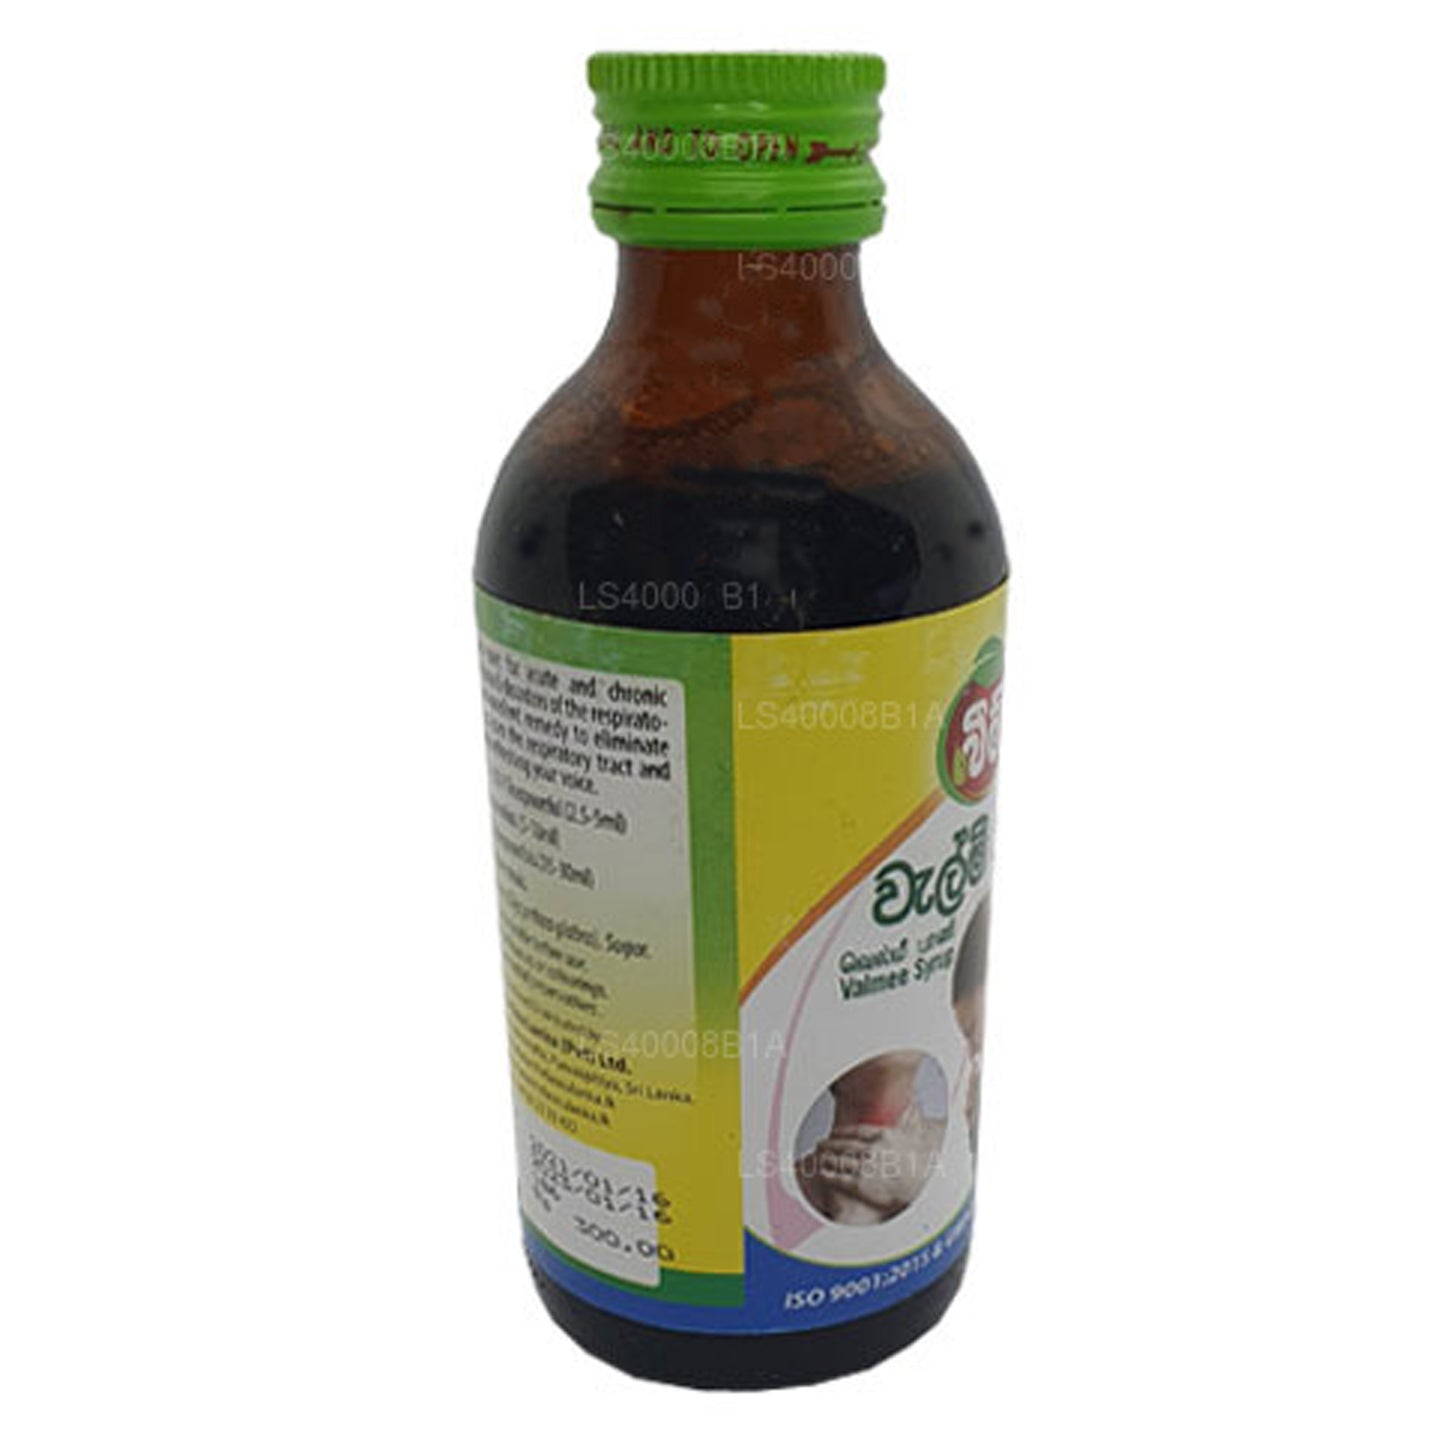 Beam Velmee Sirup (Athimadura sirup) (180 ml)